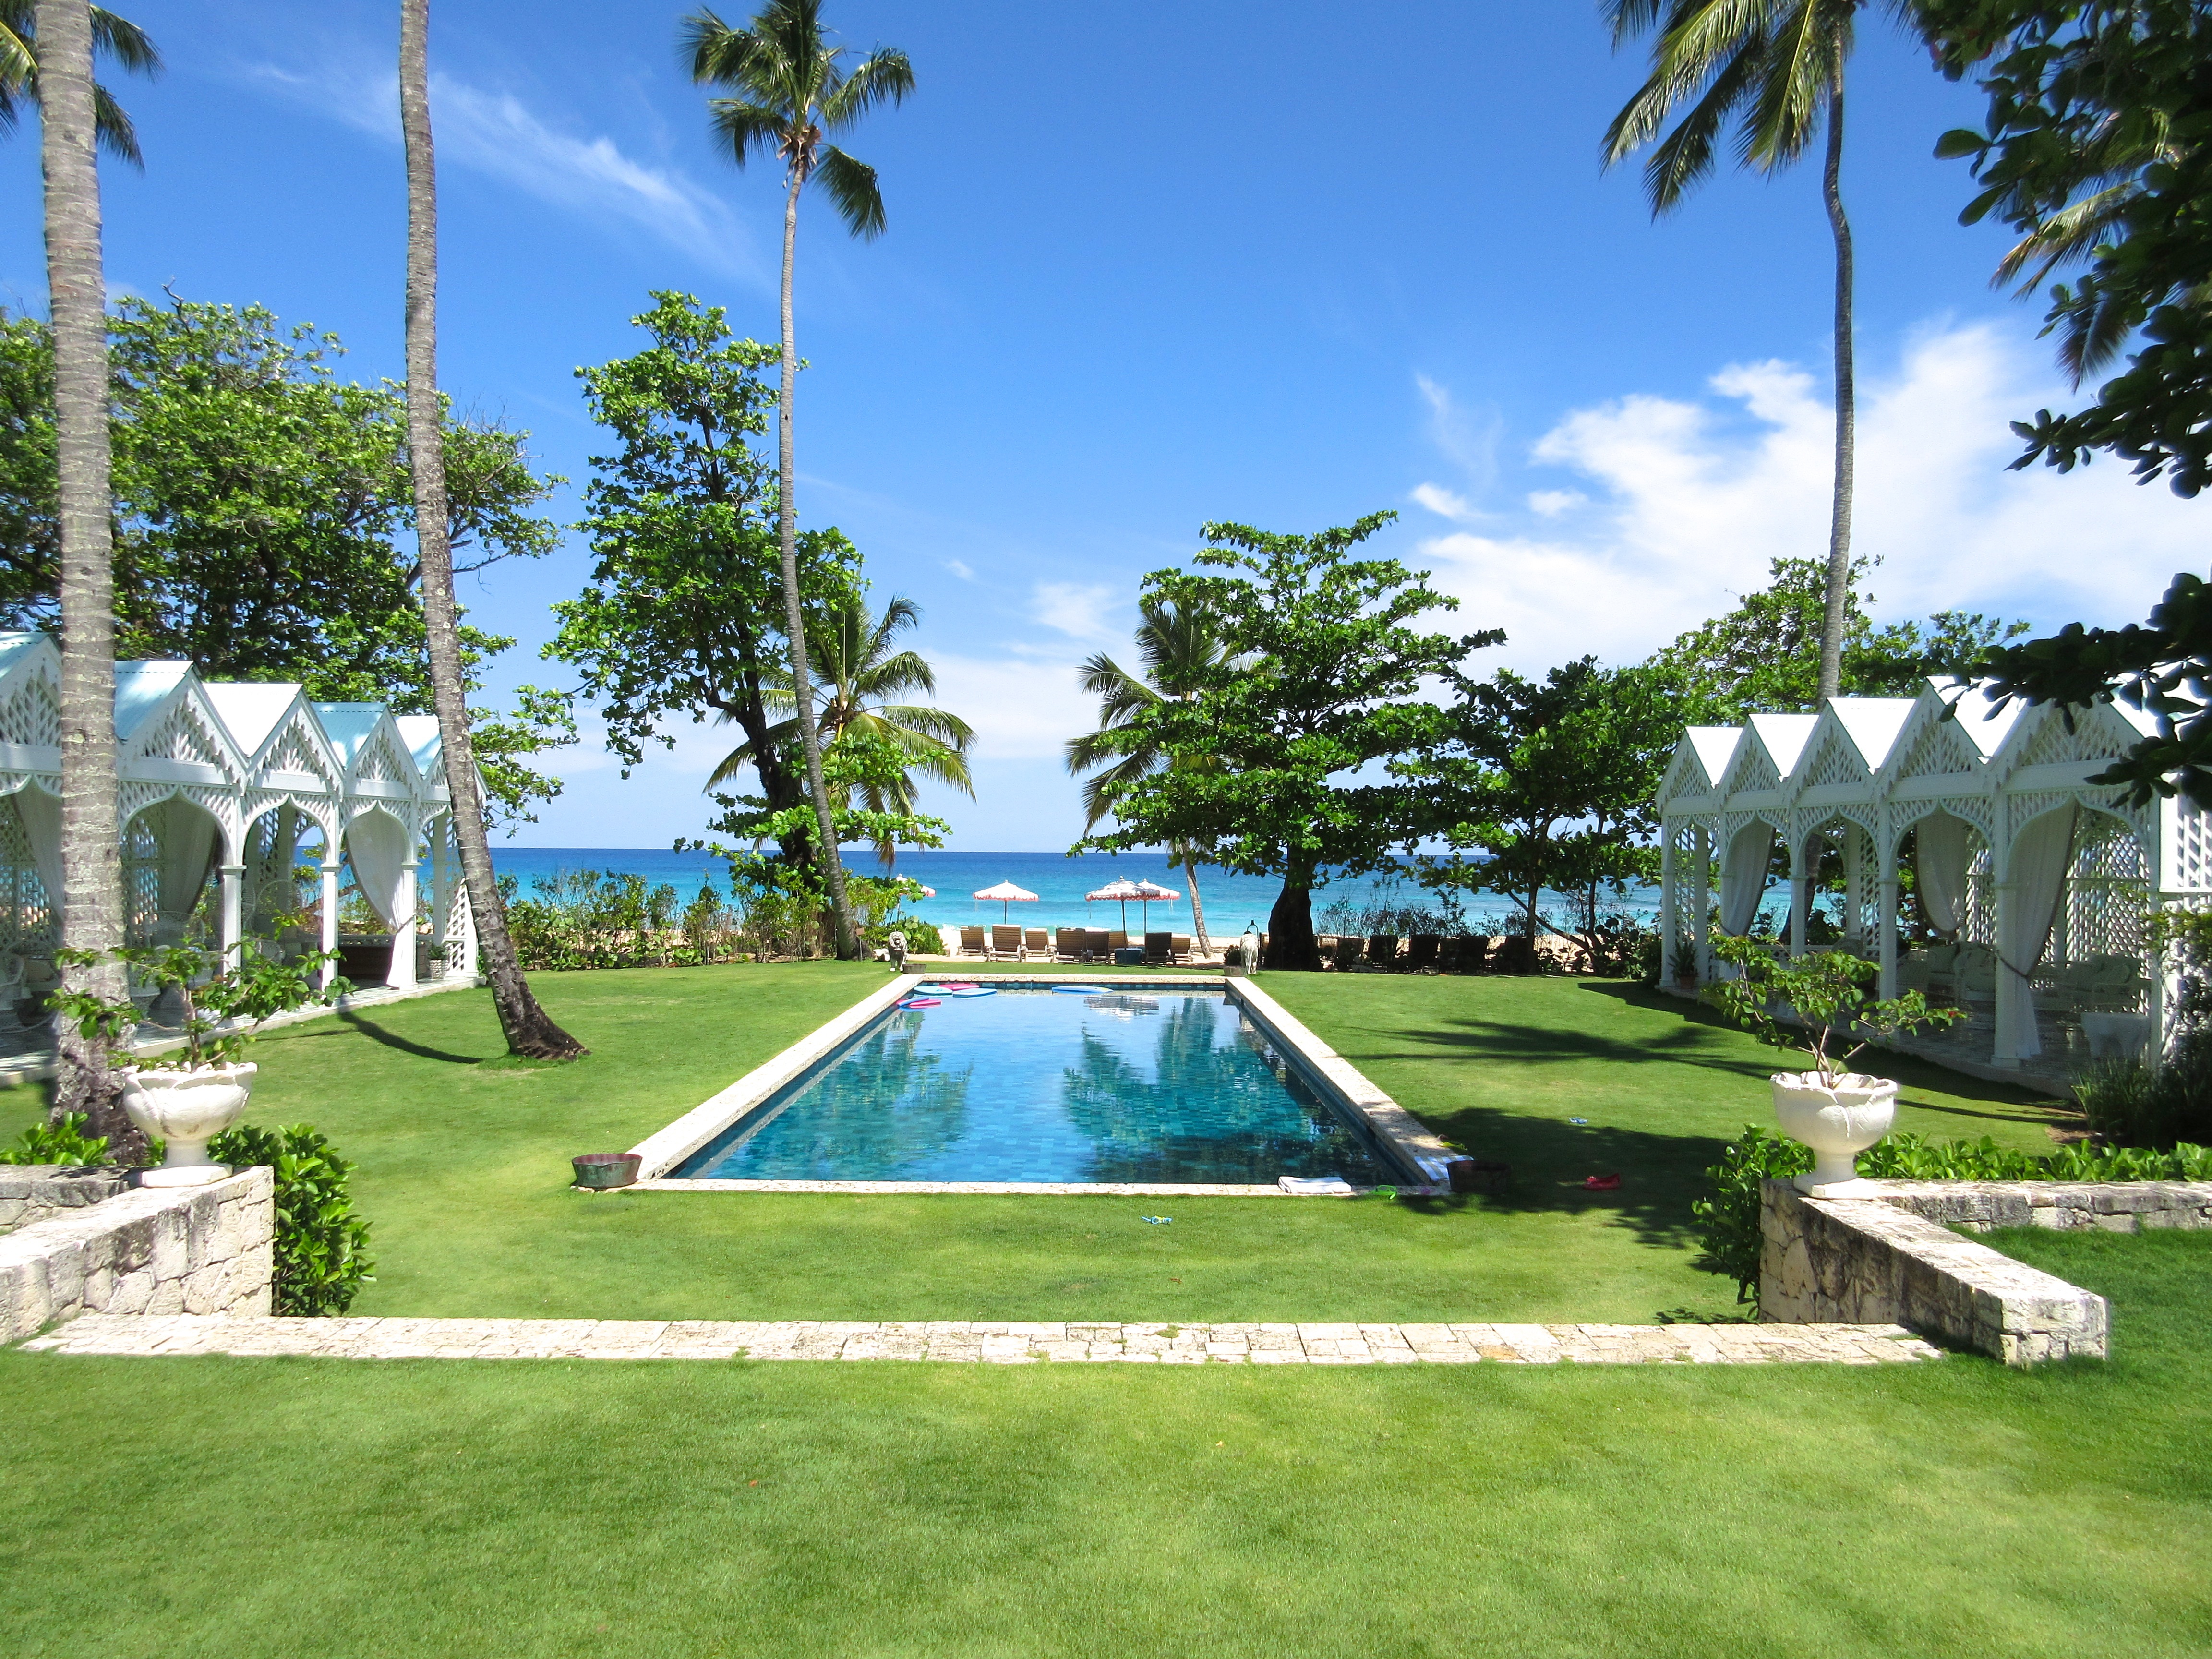 pool-grass-surround-ocean-view-dominican-republic-playa-grande-beach-club-cococozy